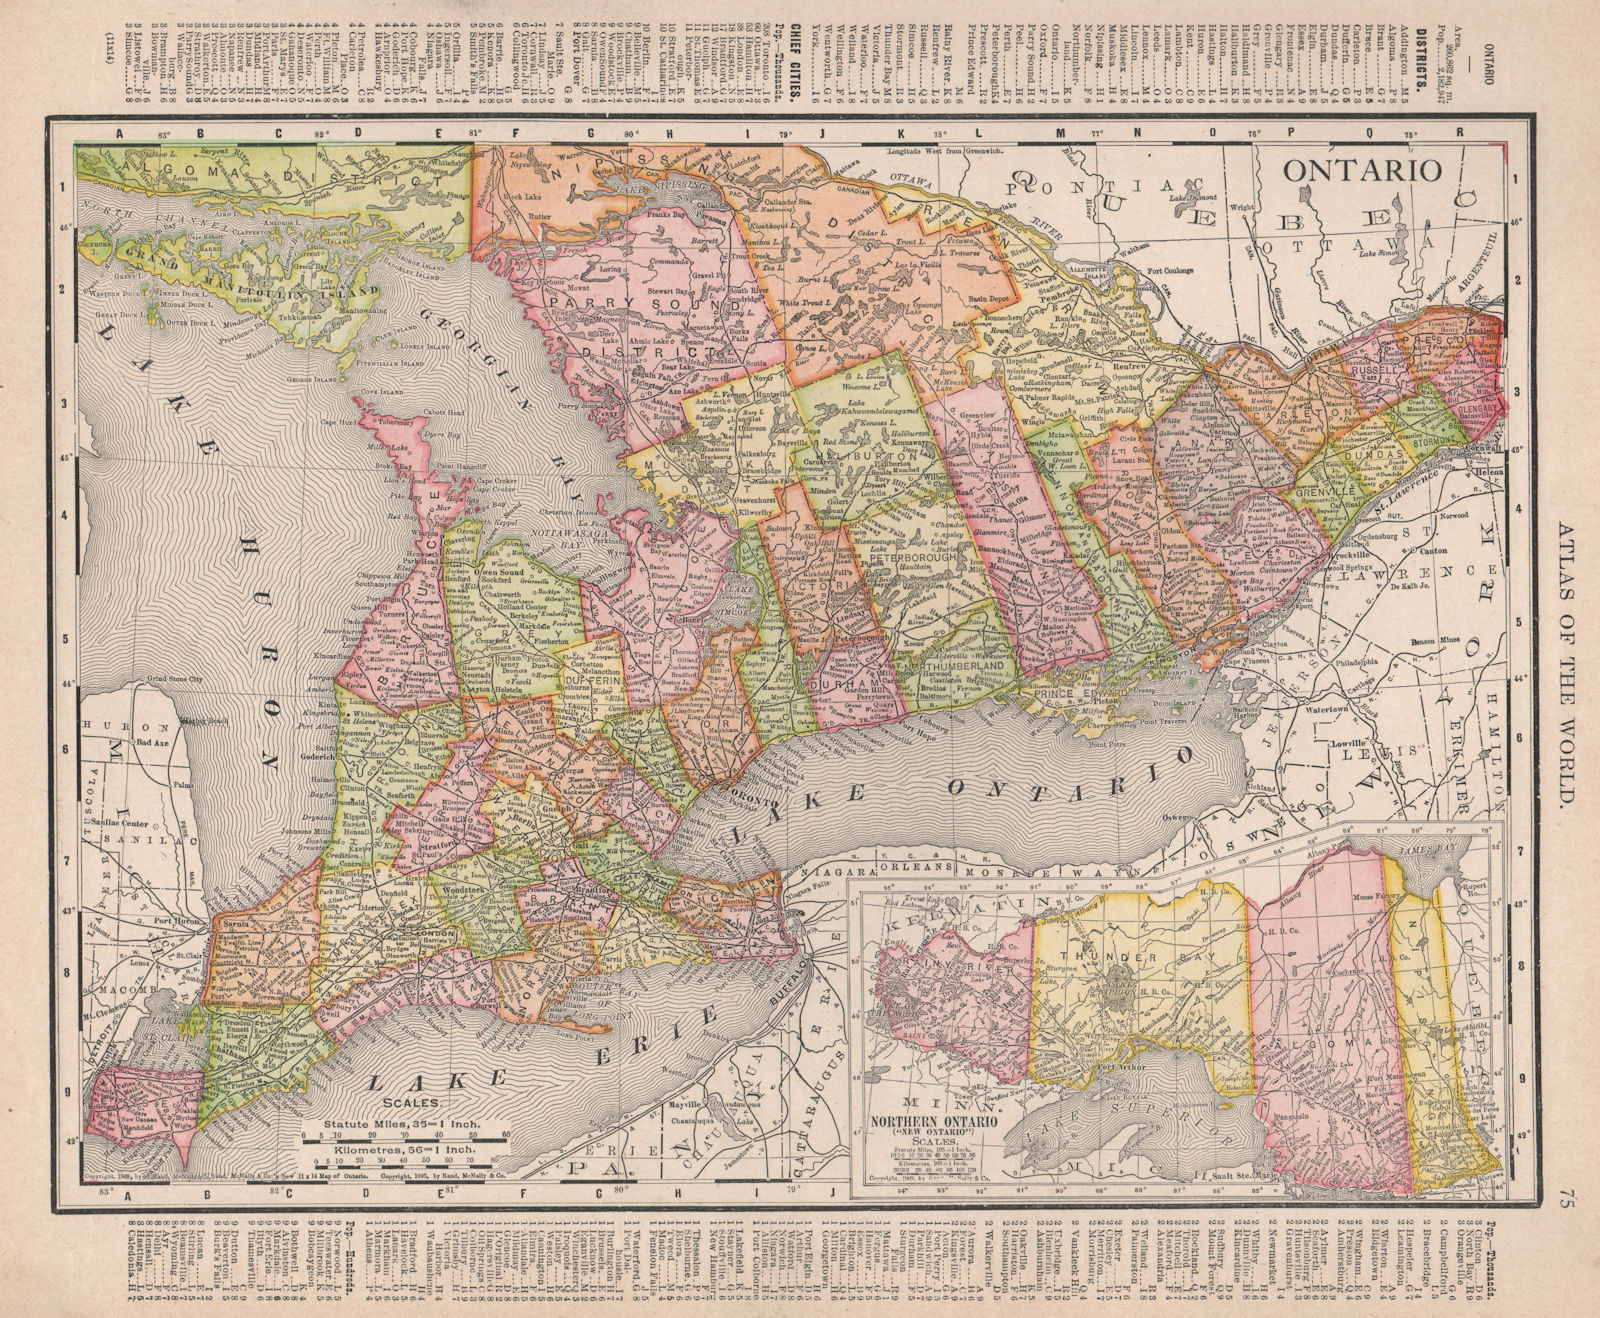 Ontario. Northern Ontario (“New Ontario”). Canada. RAND MCNALLY 1912 old map